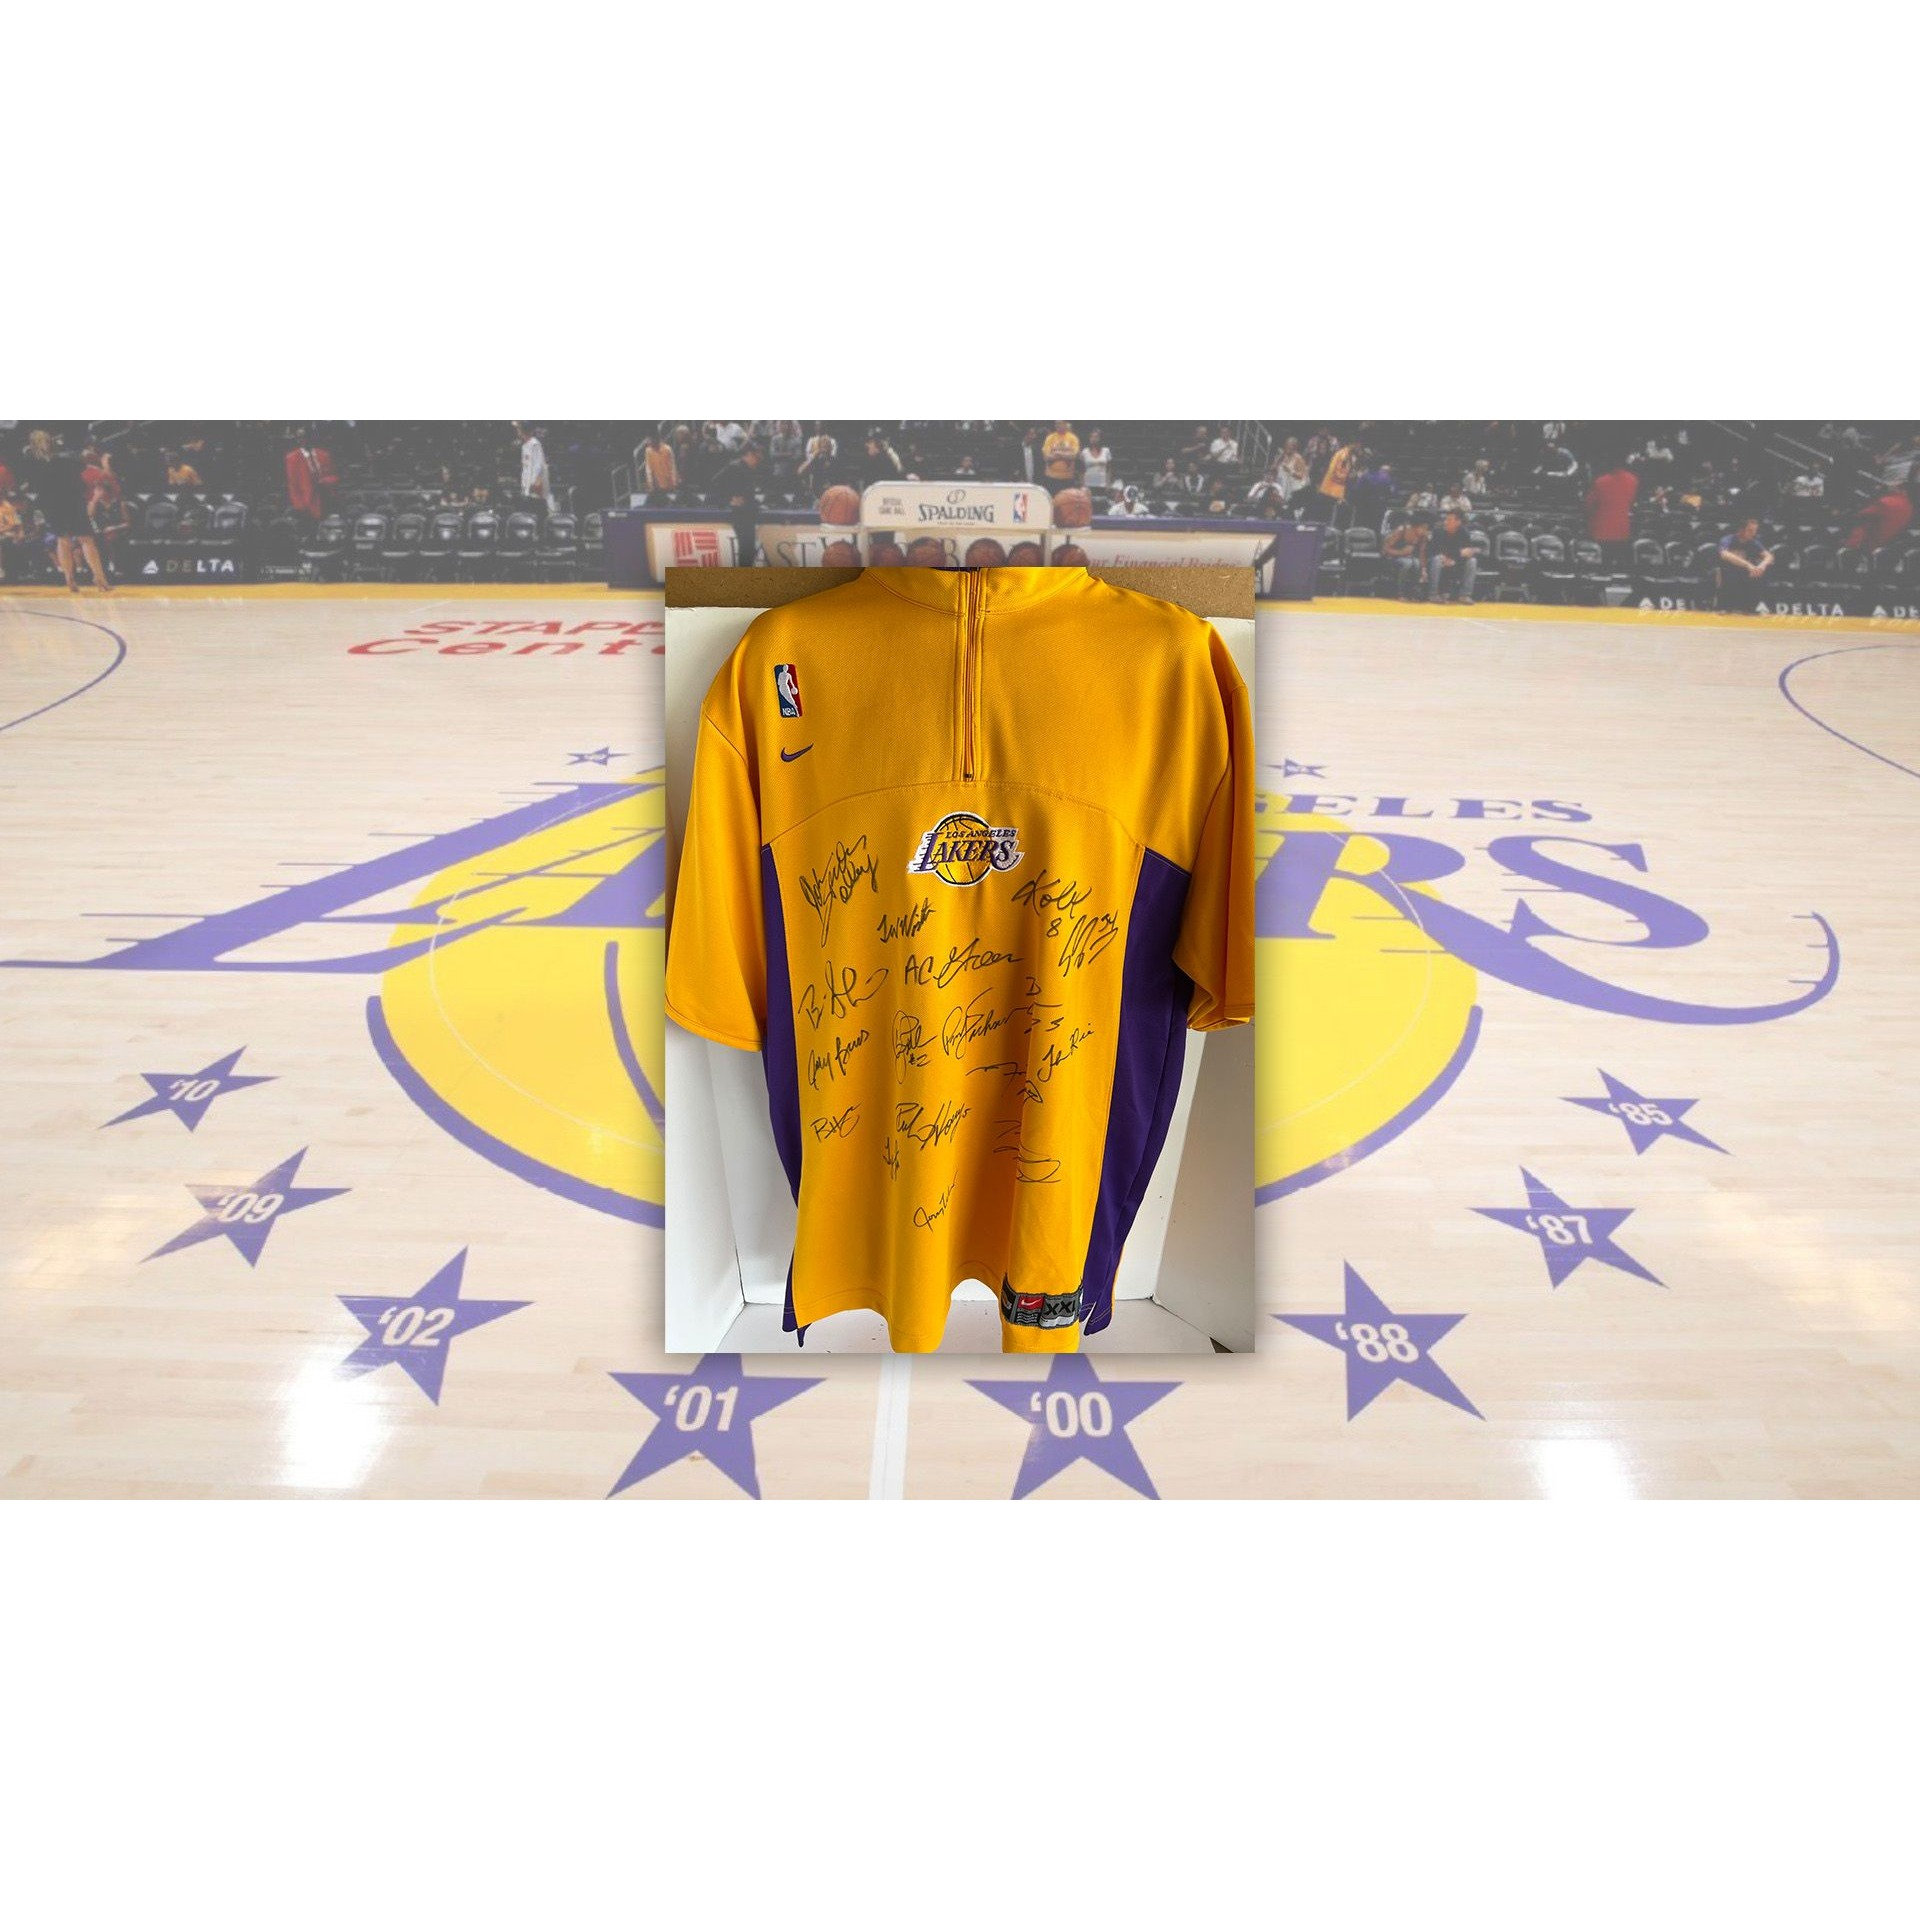 Los Angeles Lakers Practice Men's Nike Dri-FIT NBA Long-Sleeve T-Shirt.  Nike LU